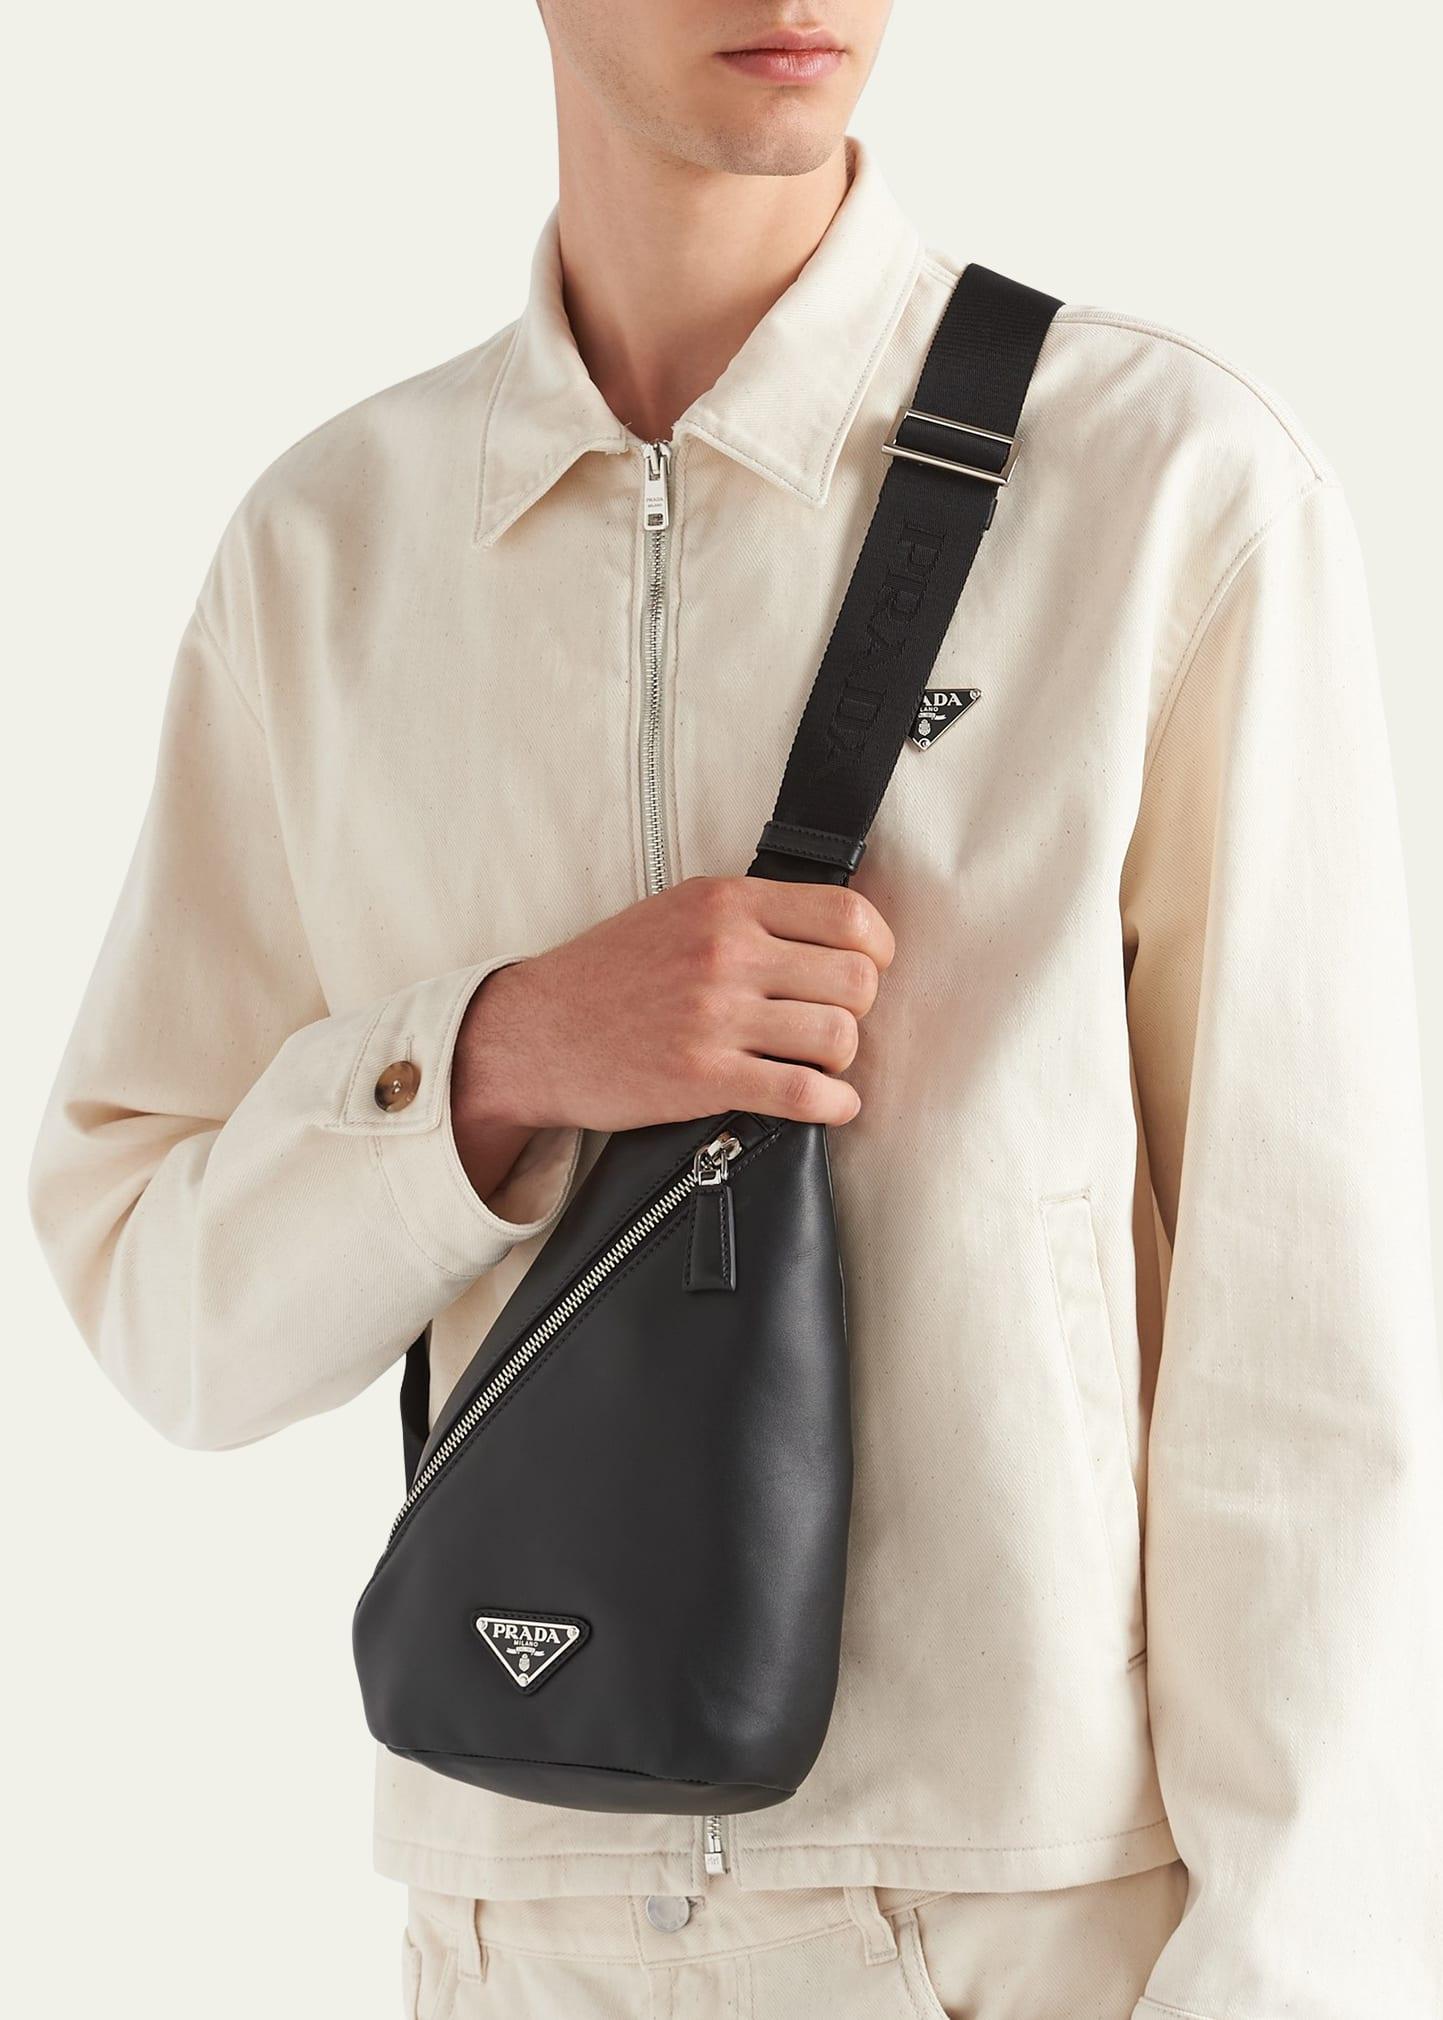 Prada Re-Nylon Shoulder Bag - F0002 Black